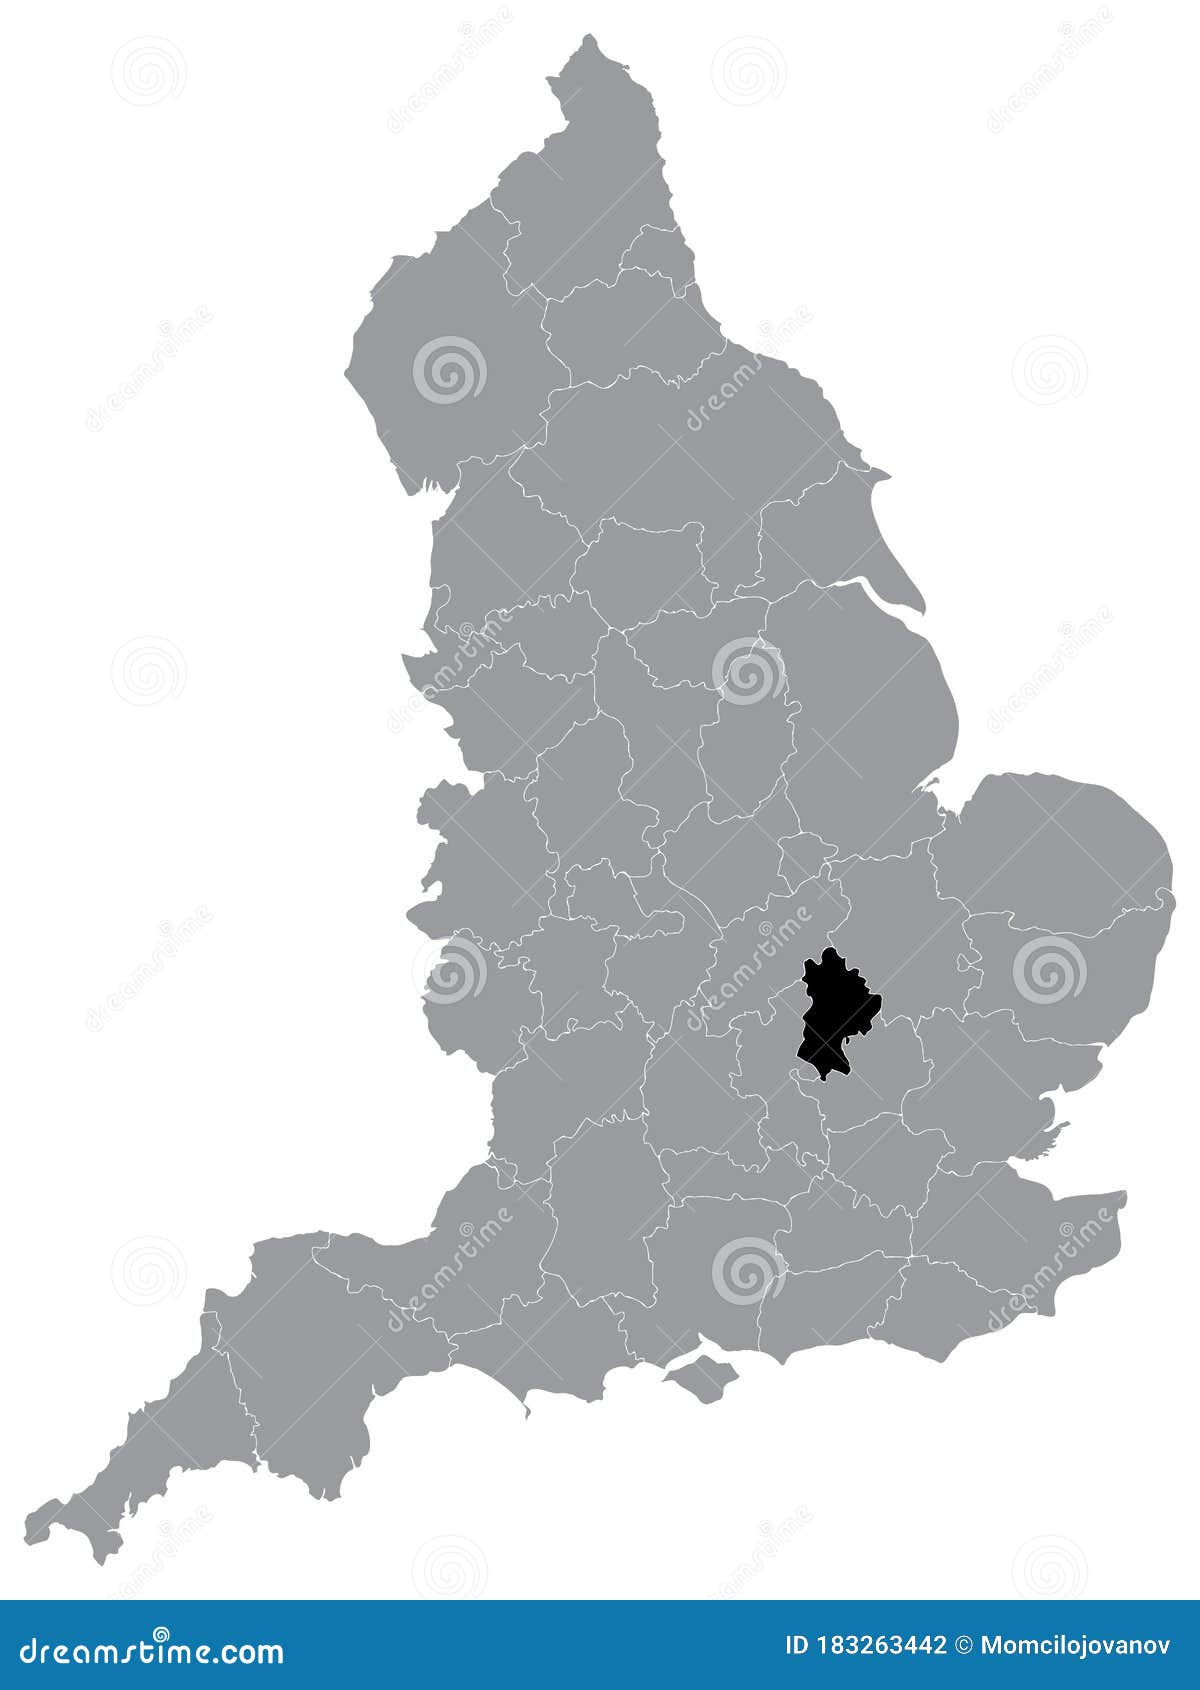 location map of bedfordshire ceremonial county lieutenancy area